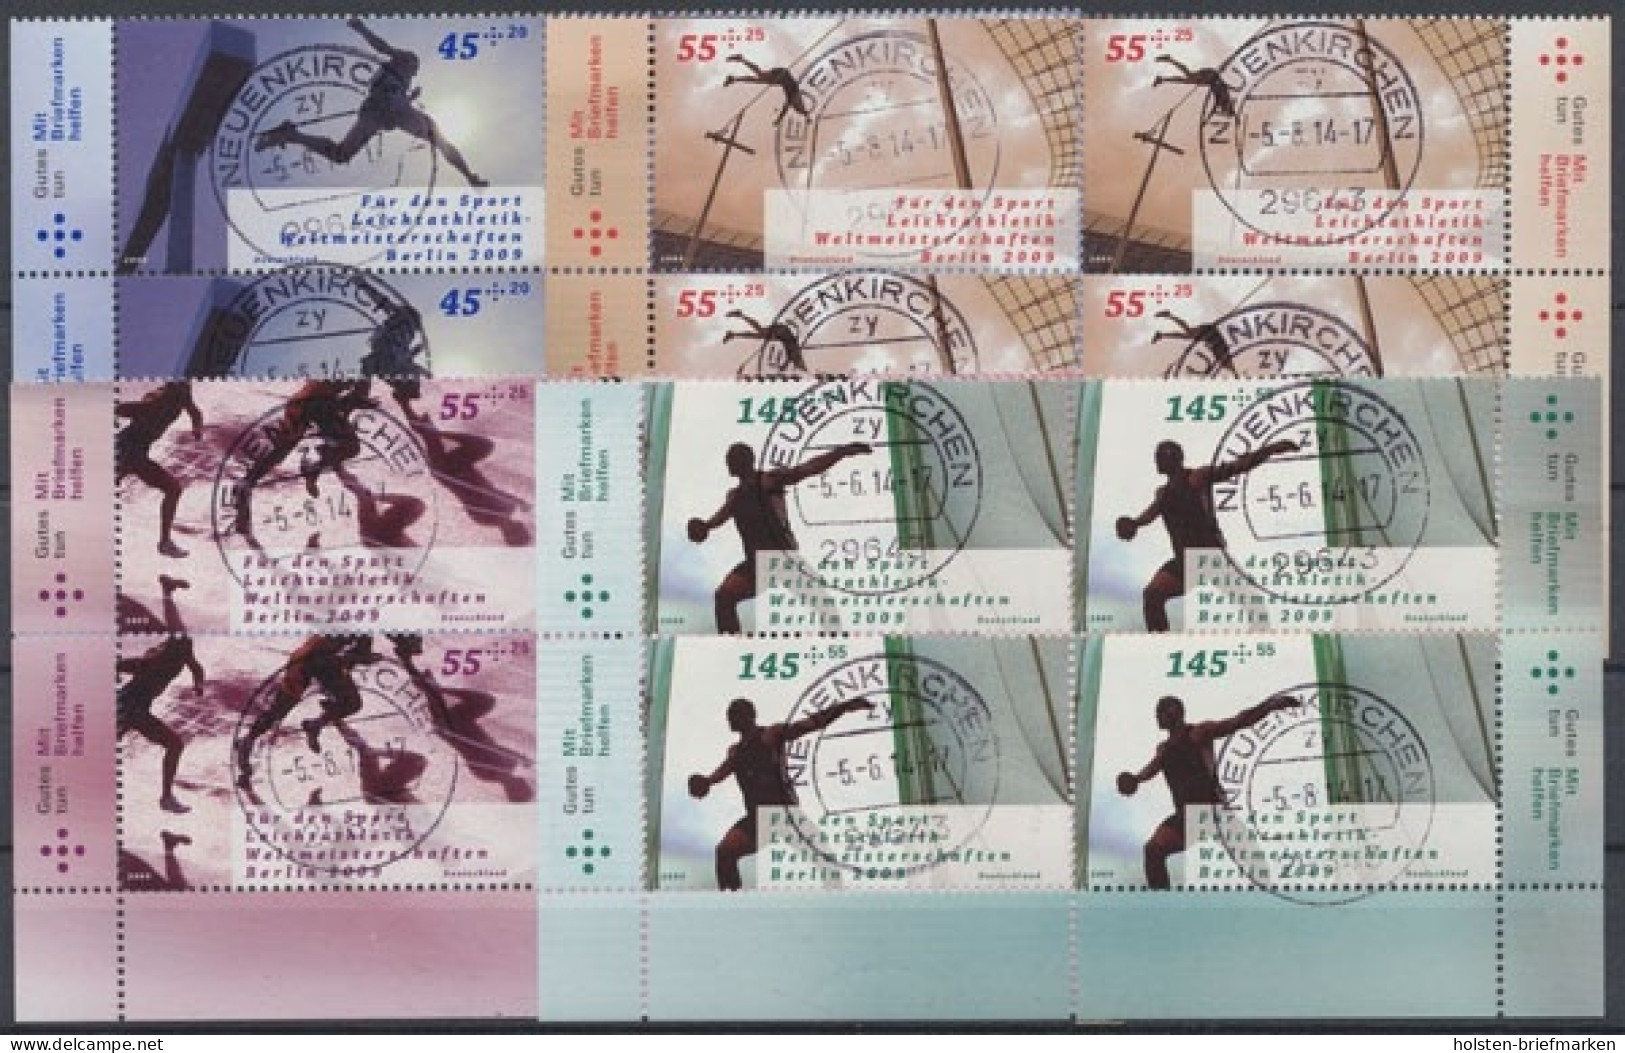 Deutschland (BRD), Michel Nr. 2727-2730 VB, Gestempelt - Used Stamps